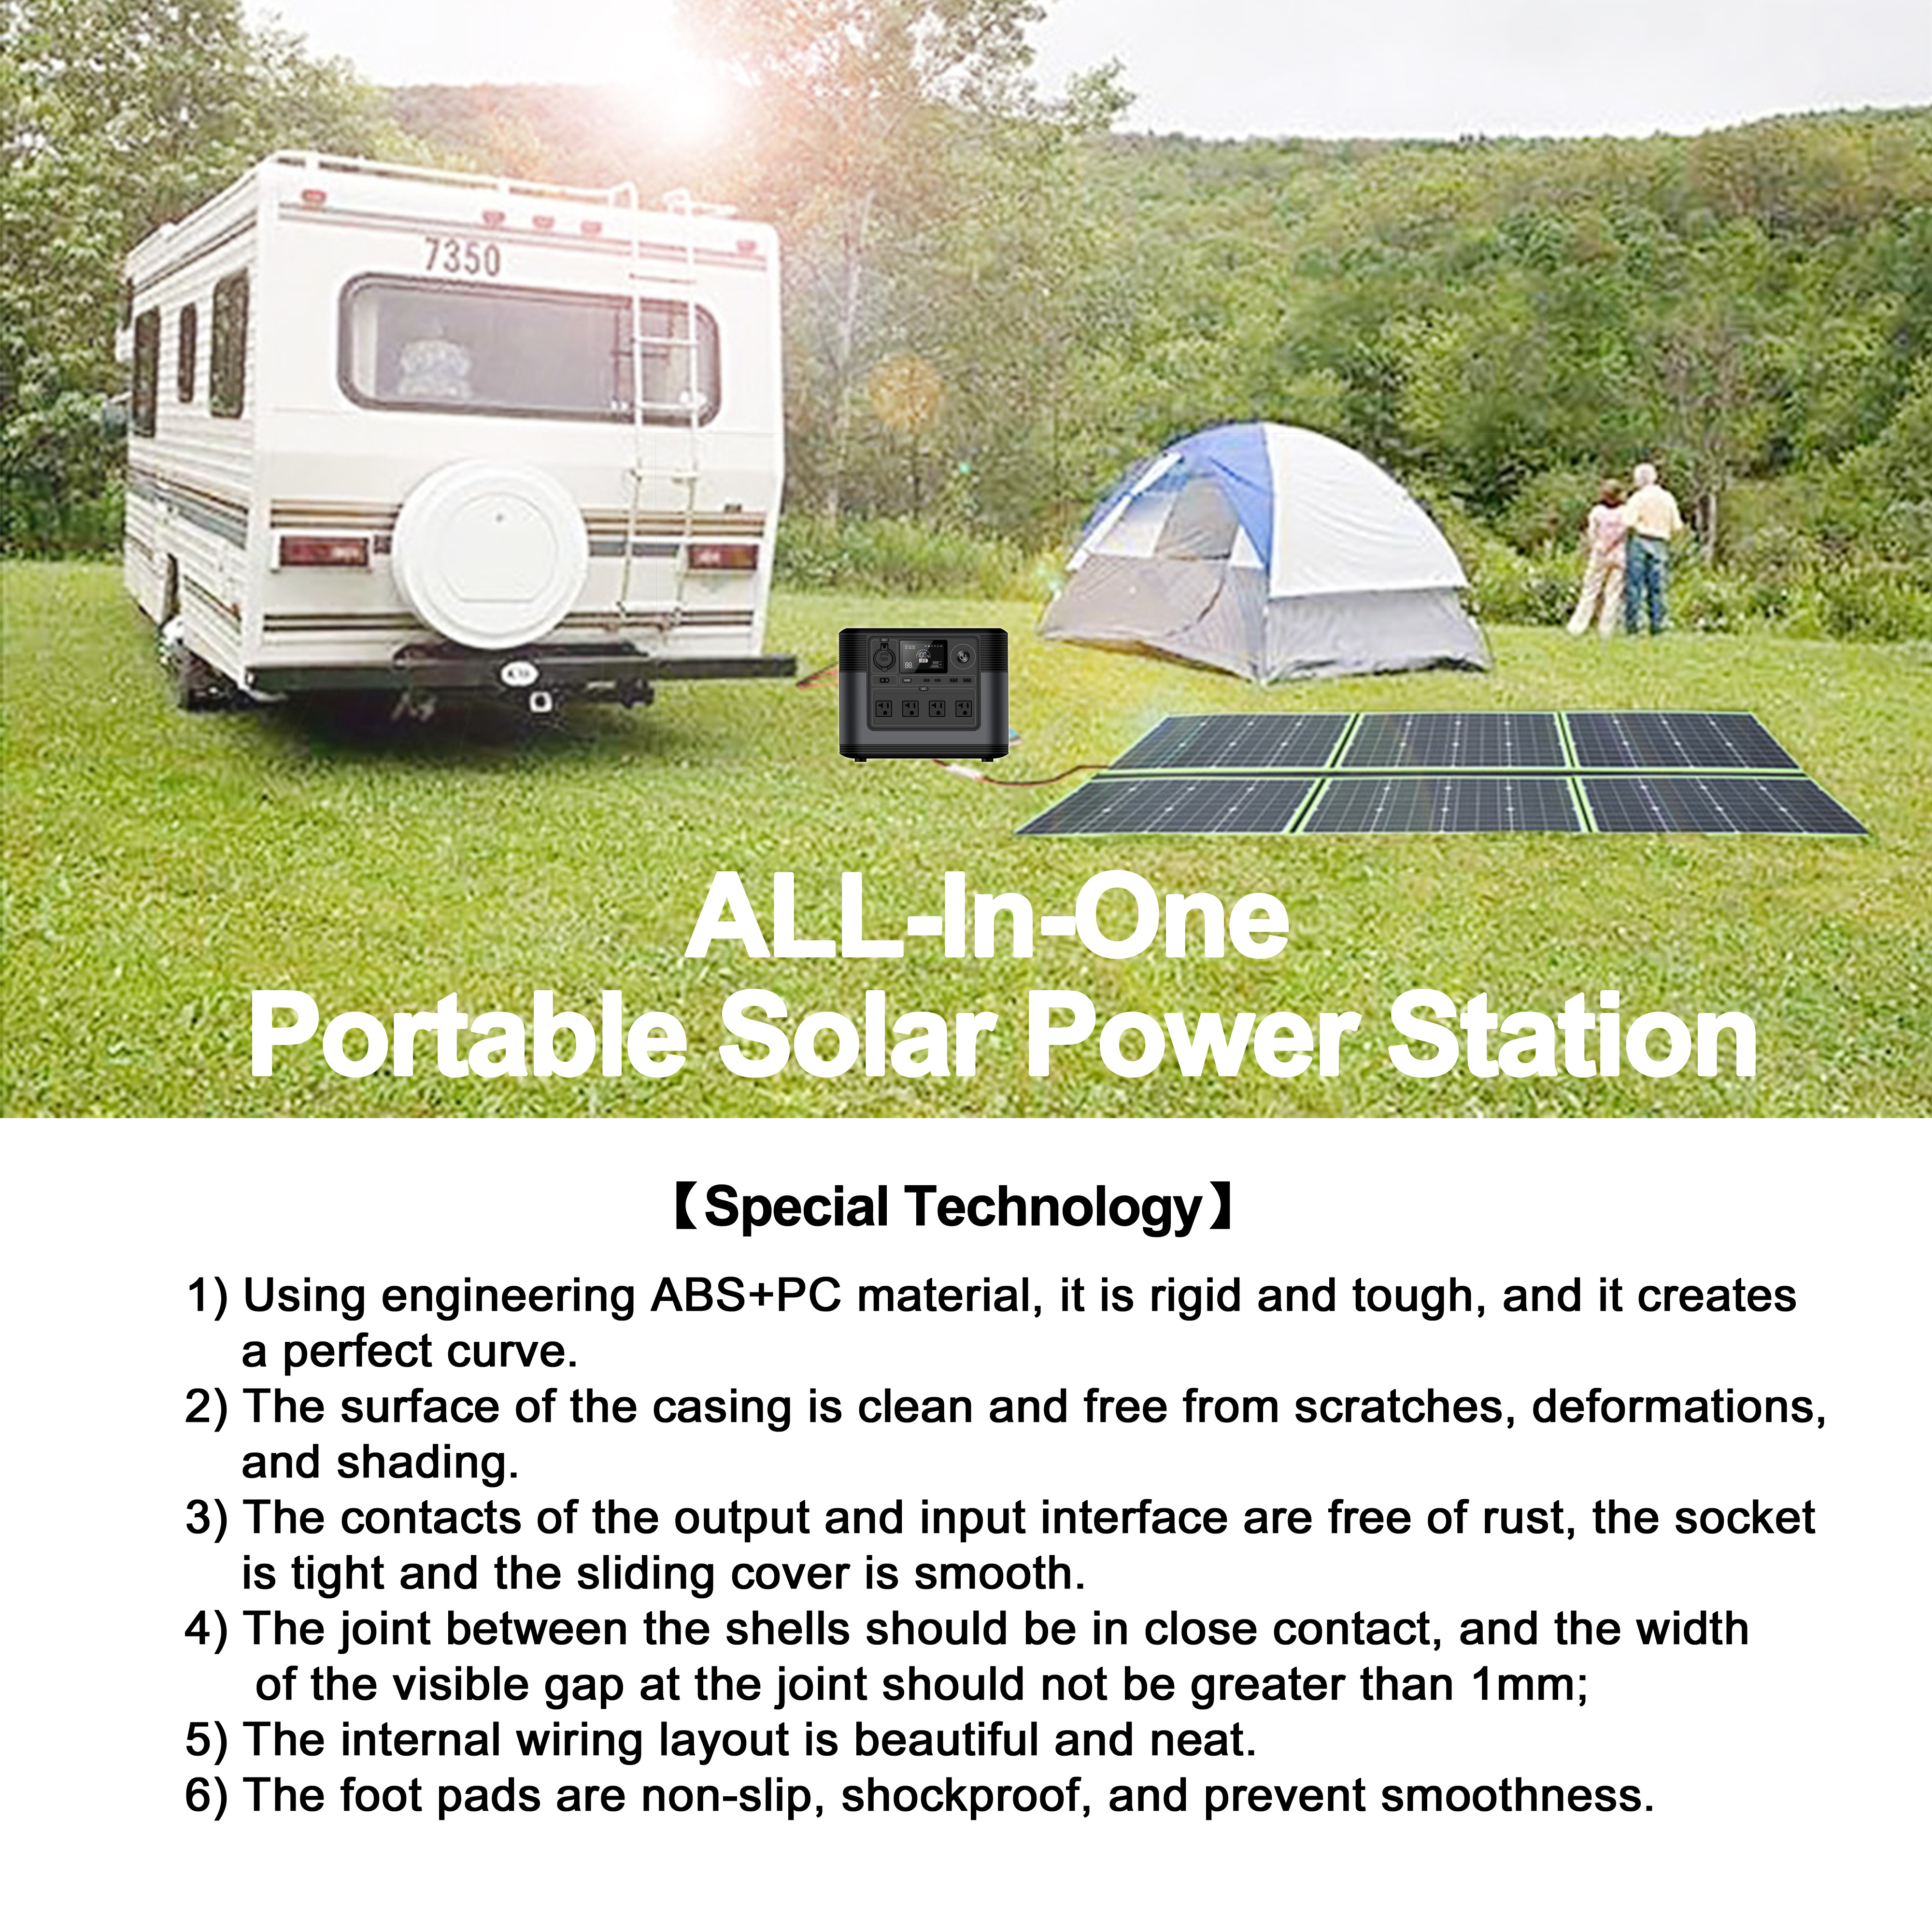 Portable Solar Generator Power Station 1200W Inverter